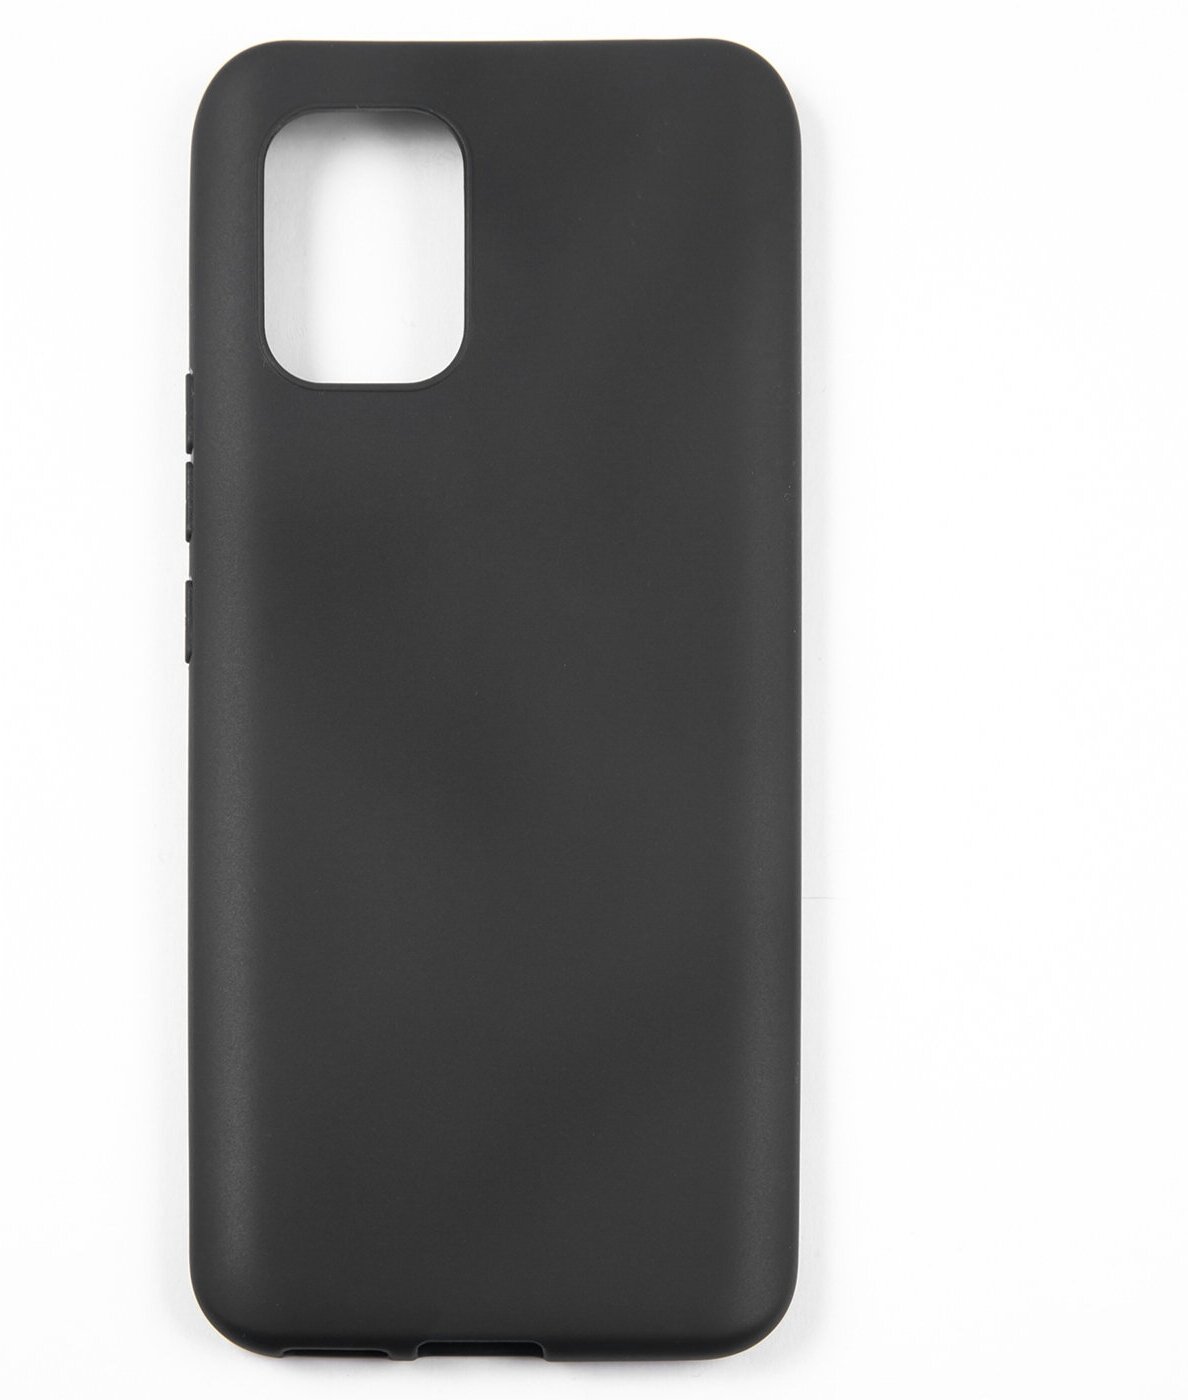 Защитный чехол для Xiaomi Mi 10 Lite/Защита от царапин для Xiaomi/Защита для телефона Ксиаоми Ми 10 Лайт/Защита для смартфона/Защитный чехол черный